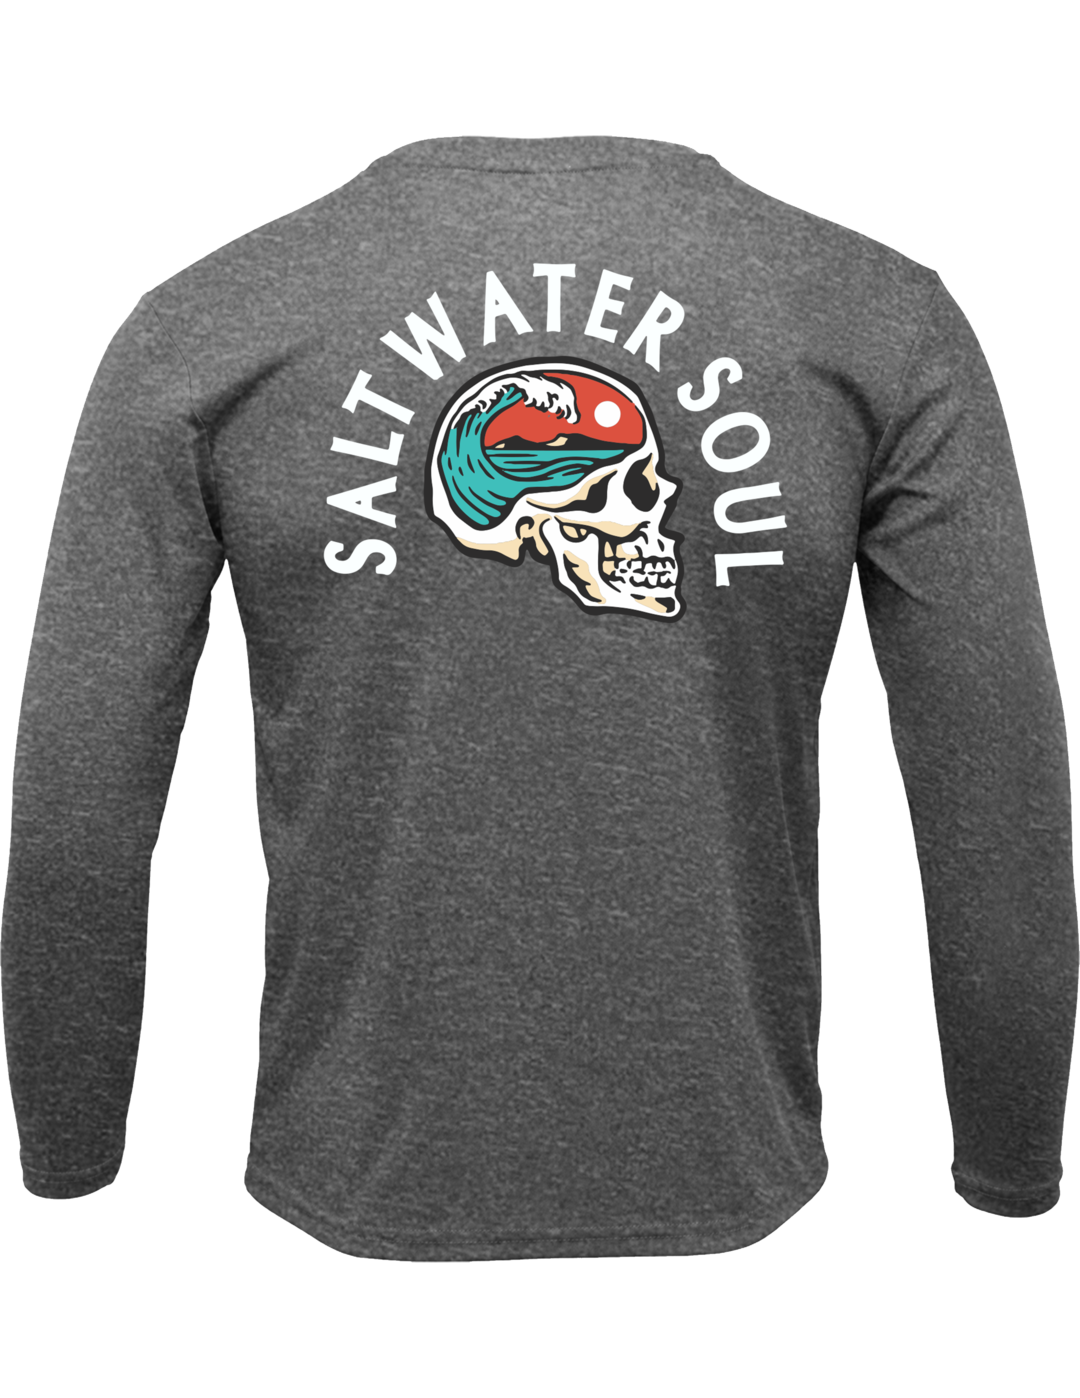 Men's Long Sleeve UV Shirt - Saltwater Soul - KC Outfitter